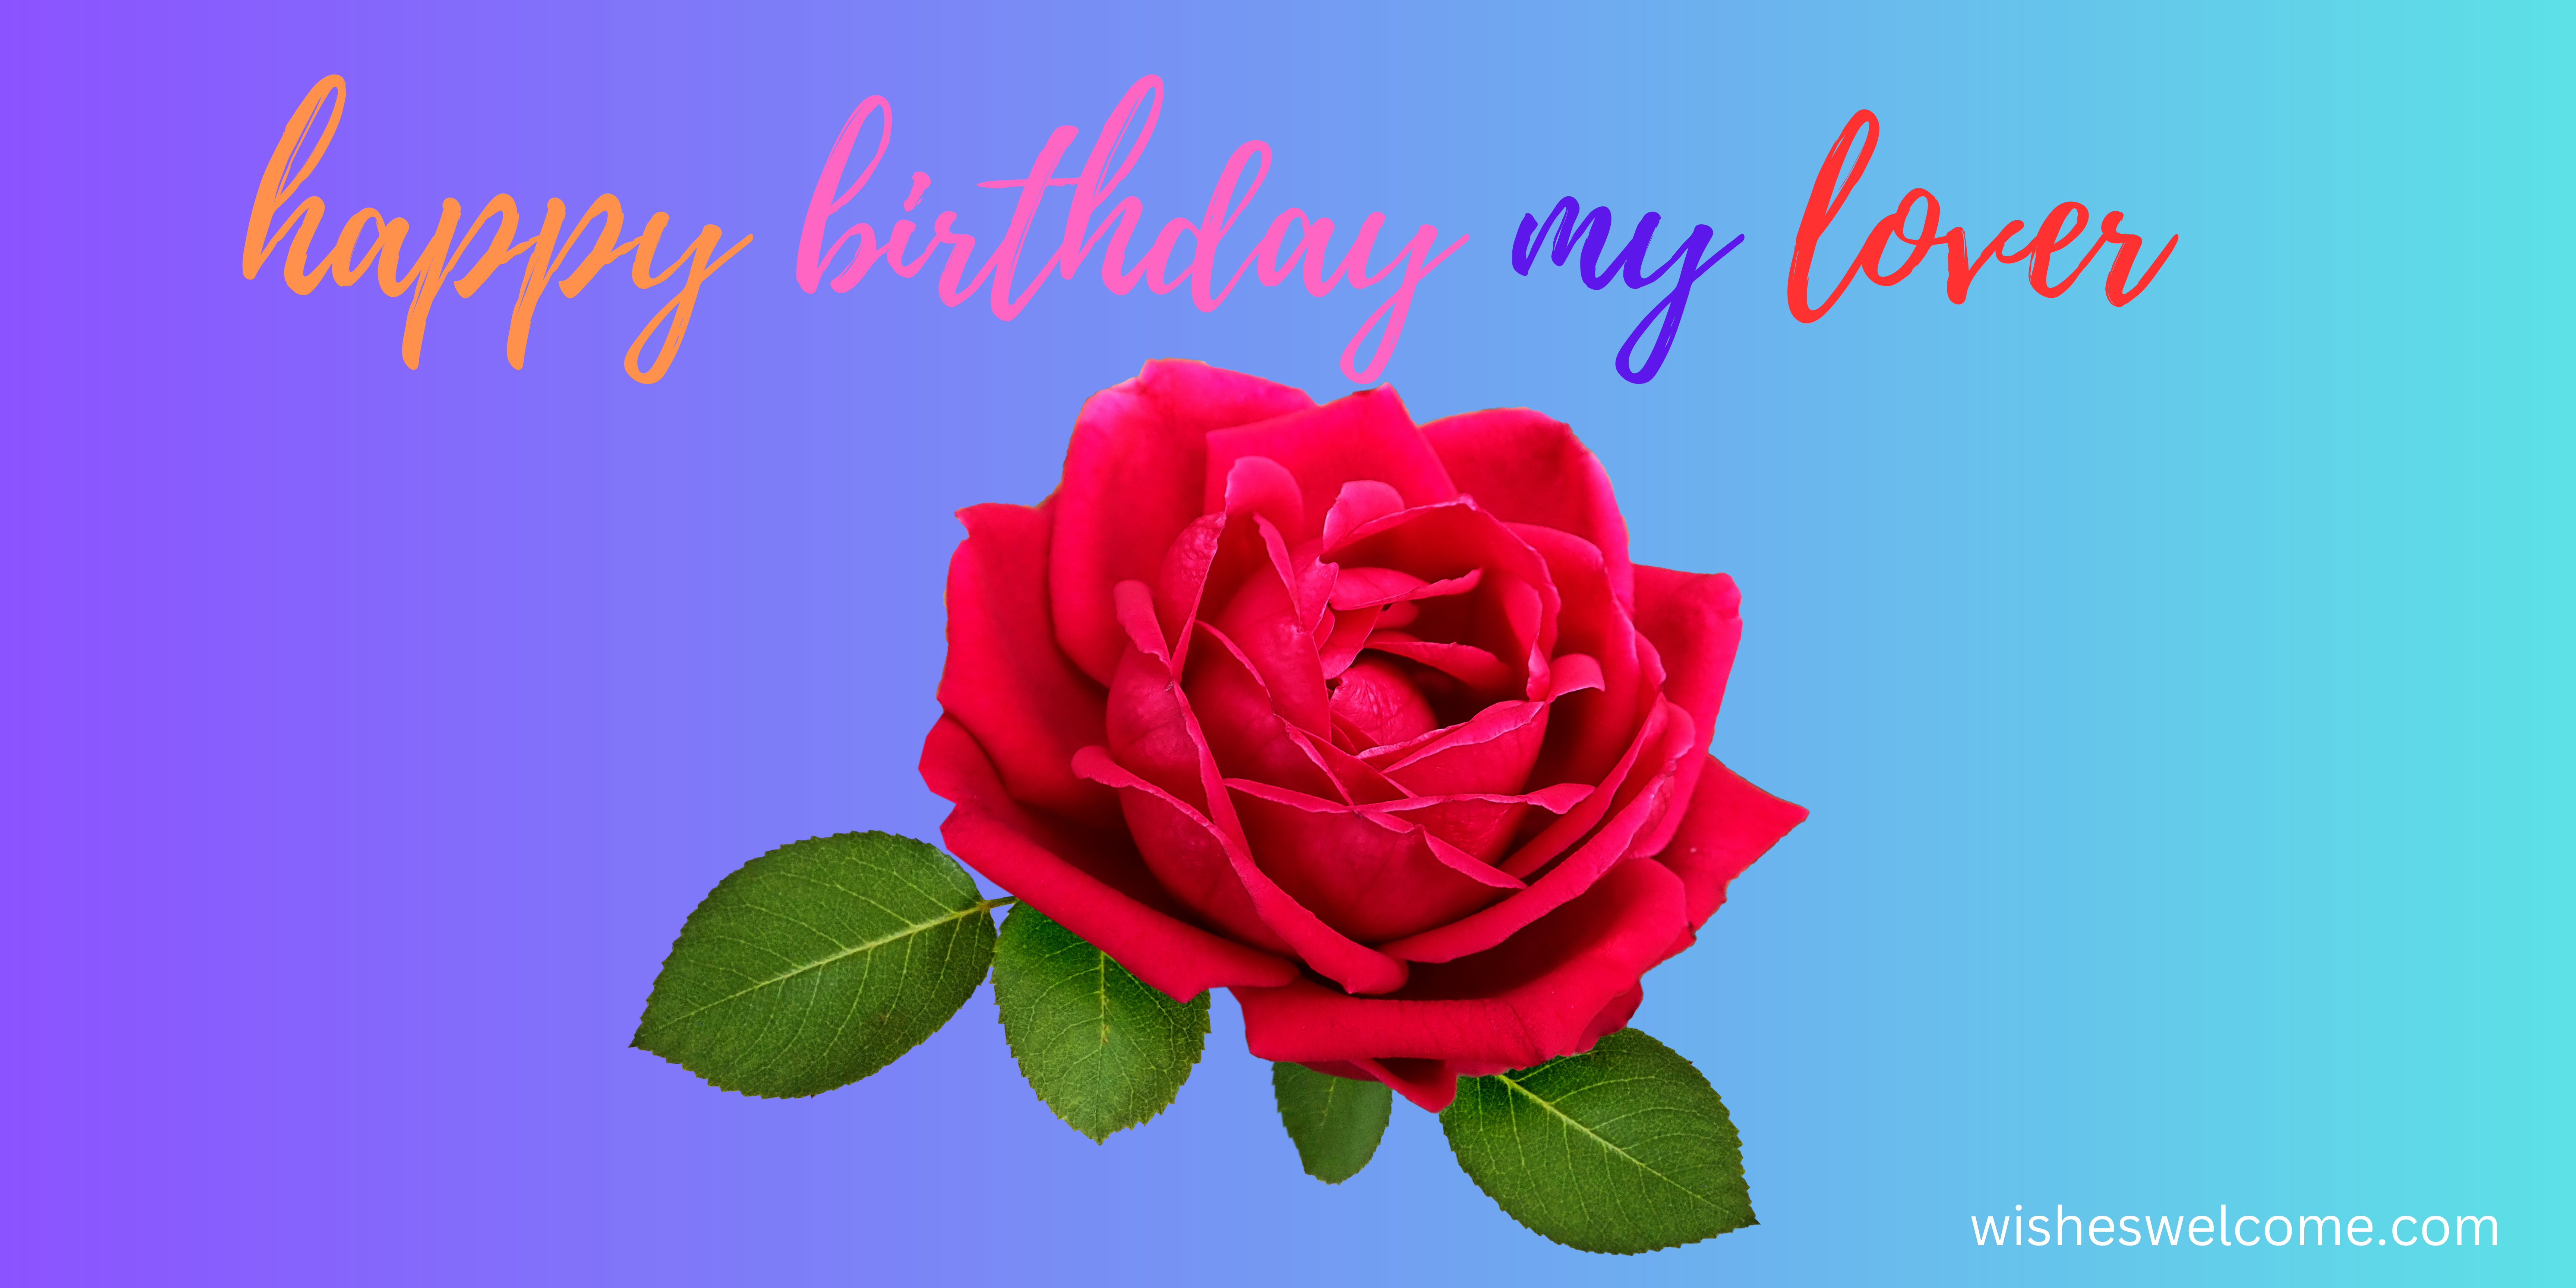 28th birthday wishes